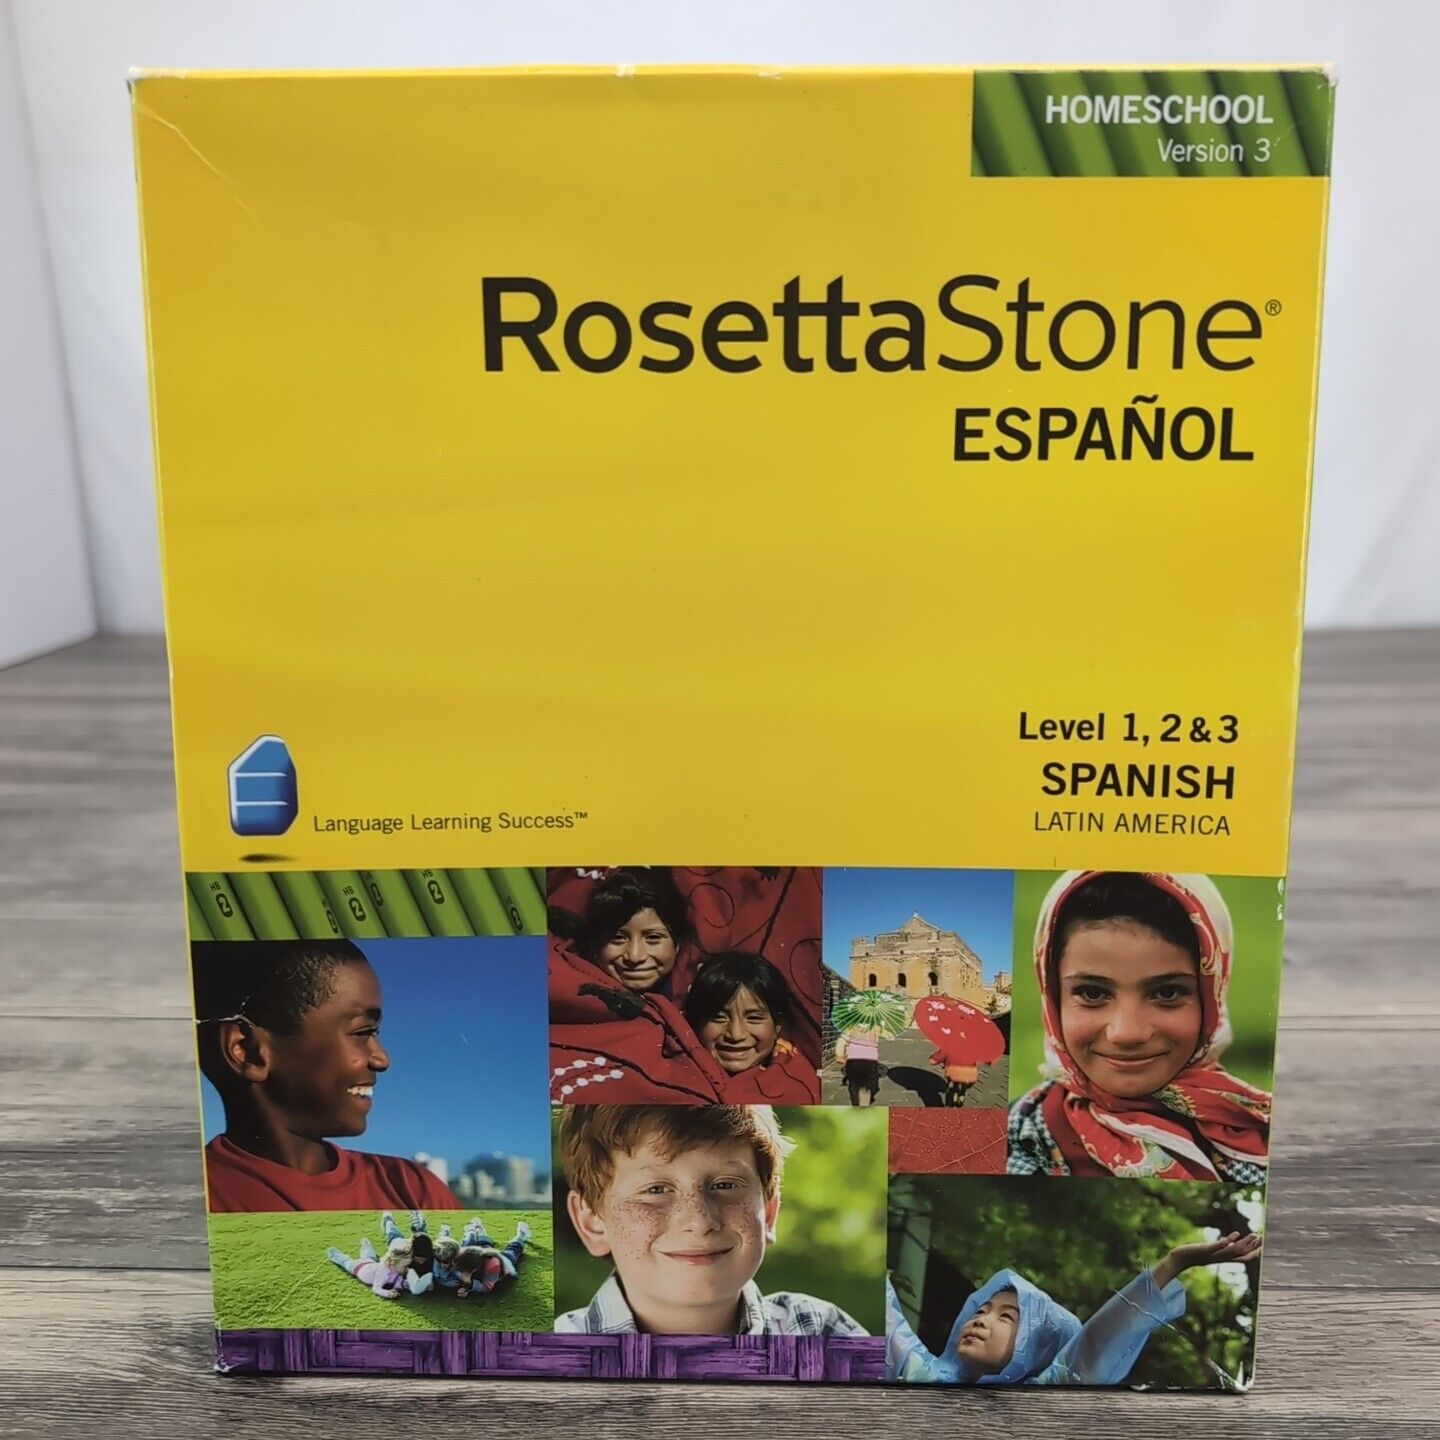 Rosetta Stone Espanol Level 1, 2 & 3 Version 3 Spanish Latin America No Head Set